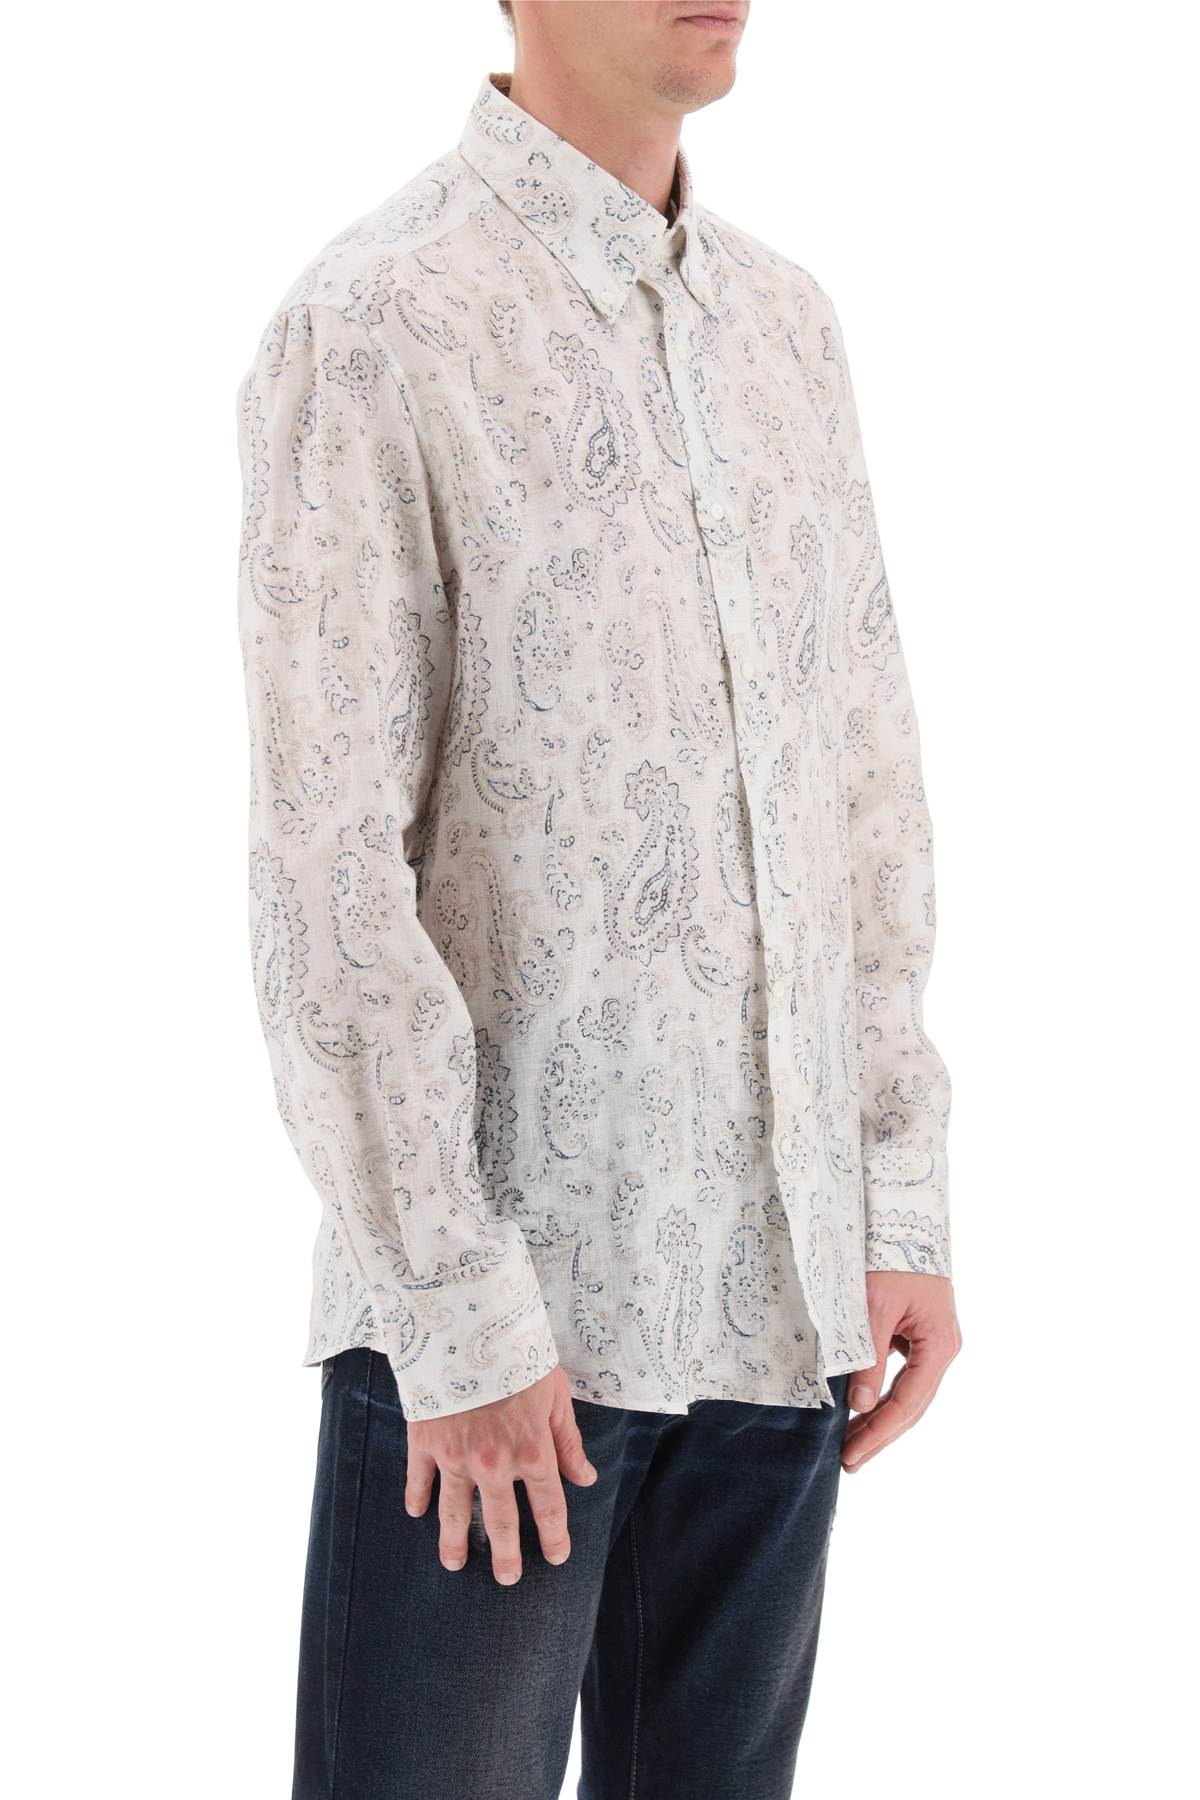 Brunello cucinelli linen shirt with paisley pattern-men > clothing > shirts-Brunello Cucinelli-Urbanheer